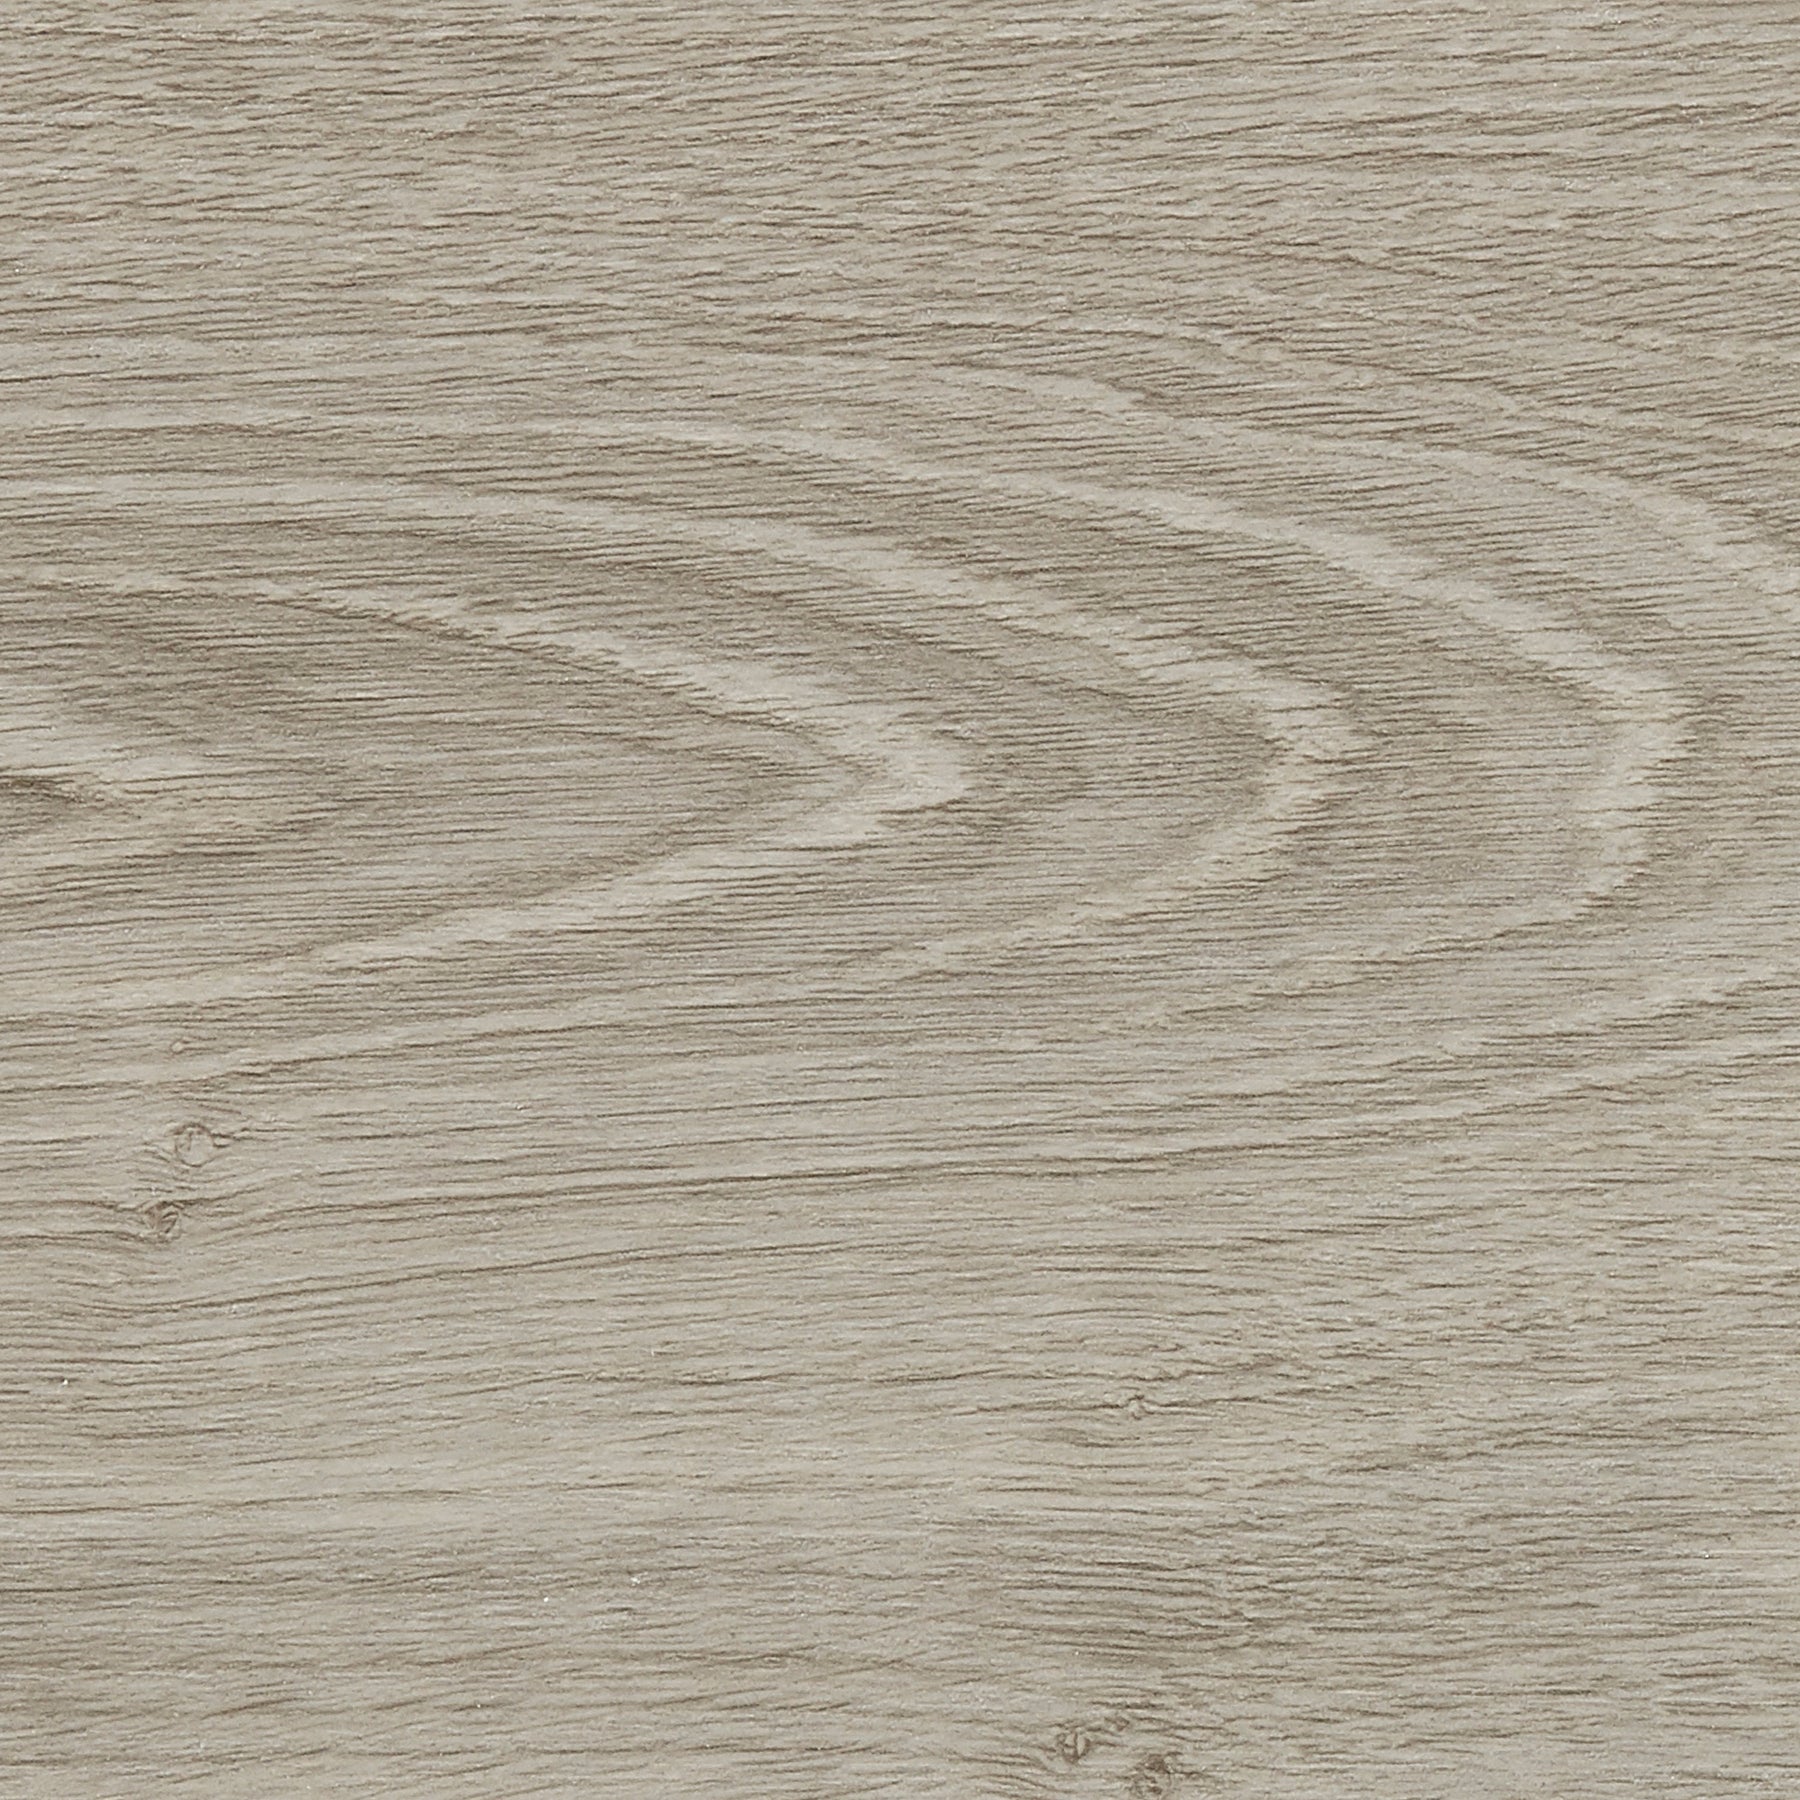 60001606 (Pure Click 55 Authentic Oak (woodgrain) gray)